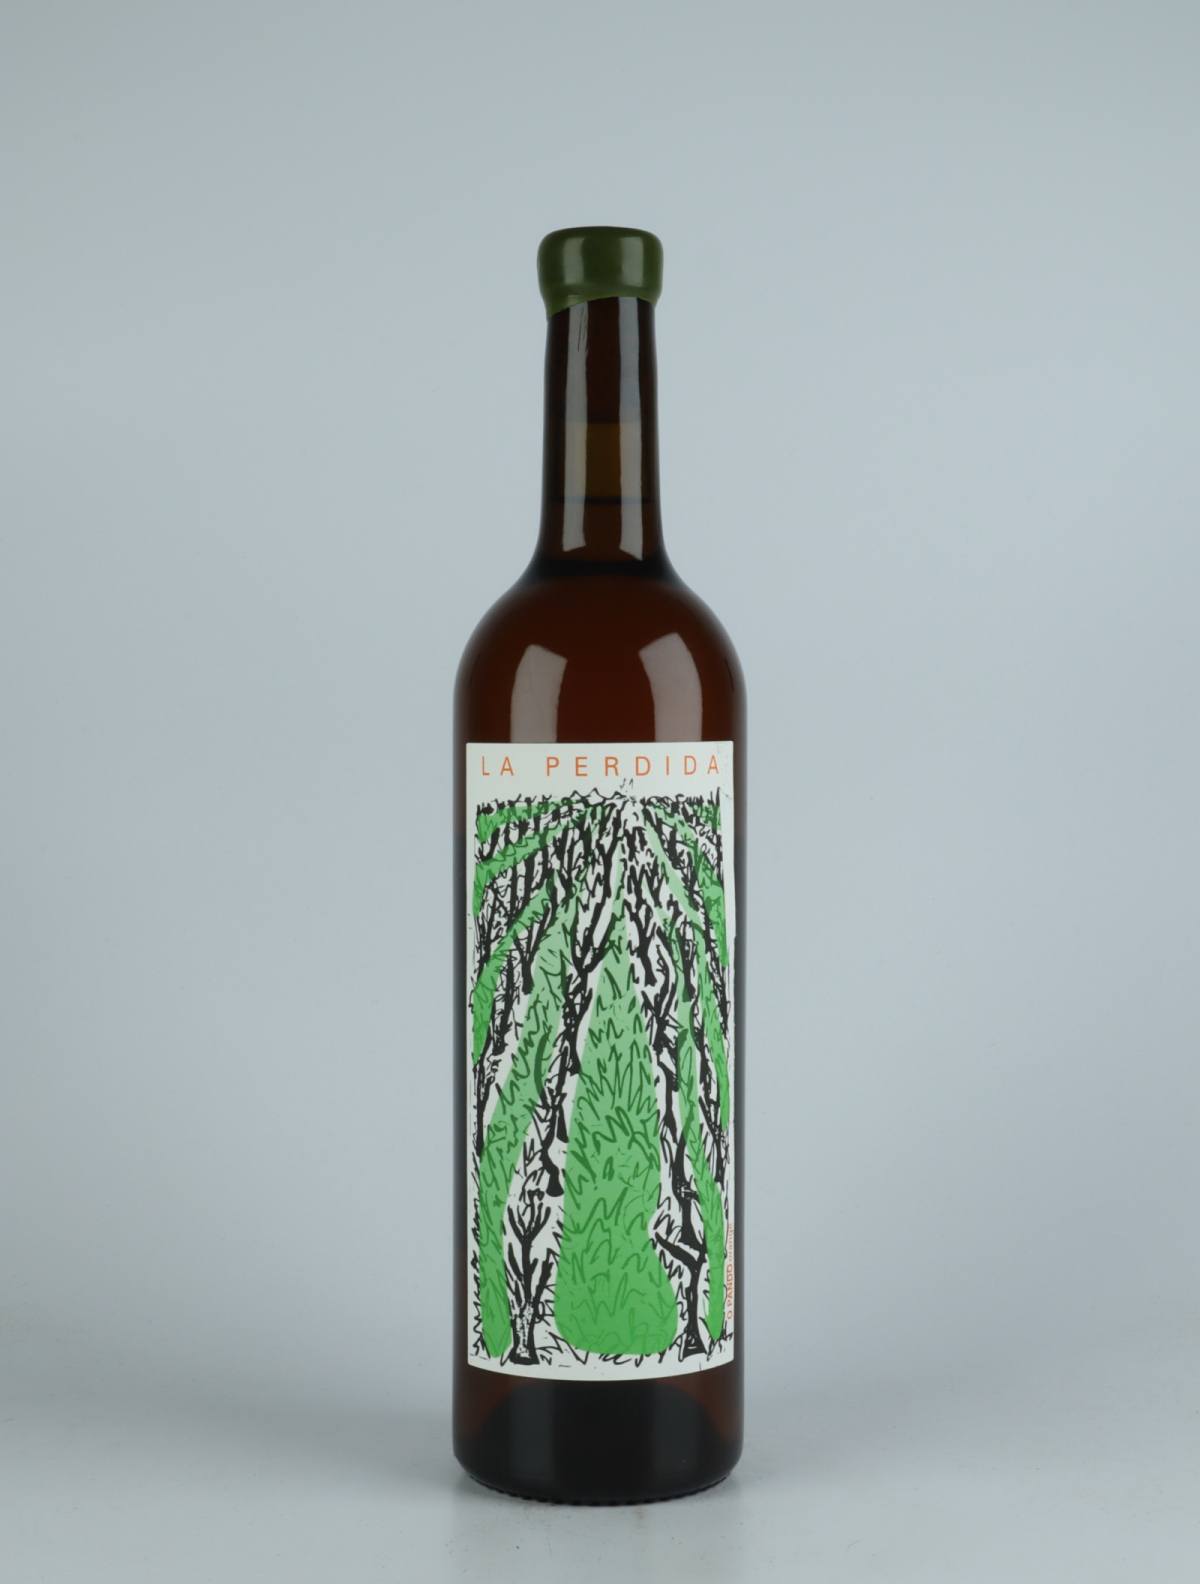 A bottle 2021 O Pando Orange Orange wine from La Perdida, Ribeira Sacra in Spain